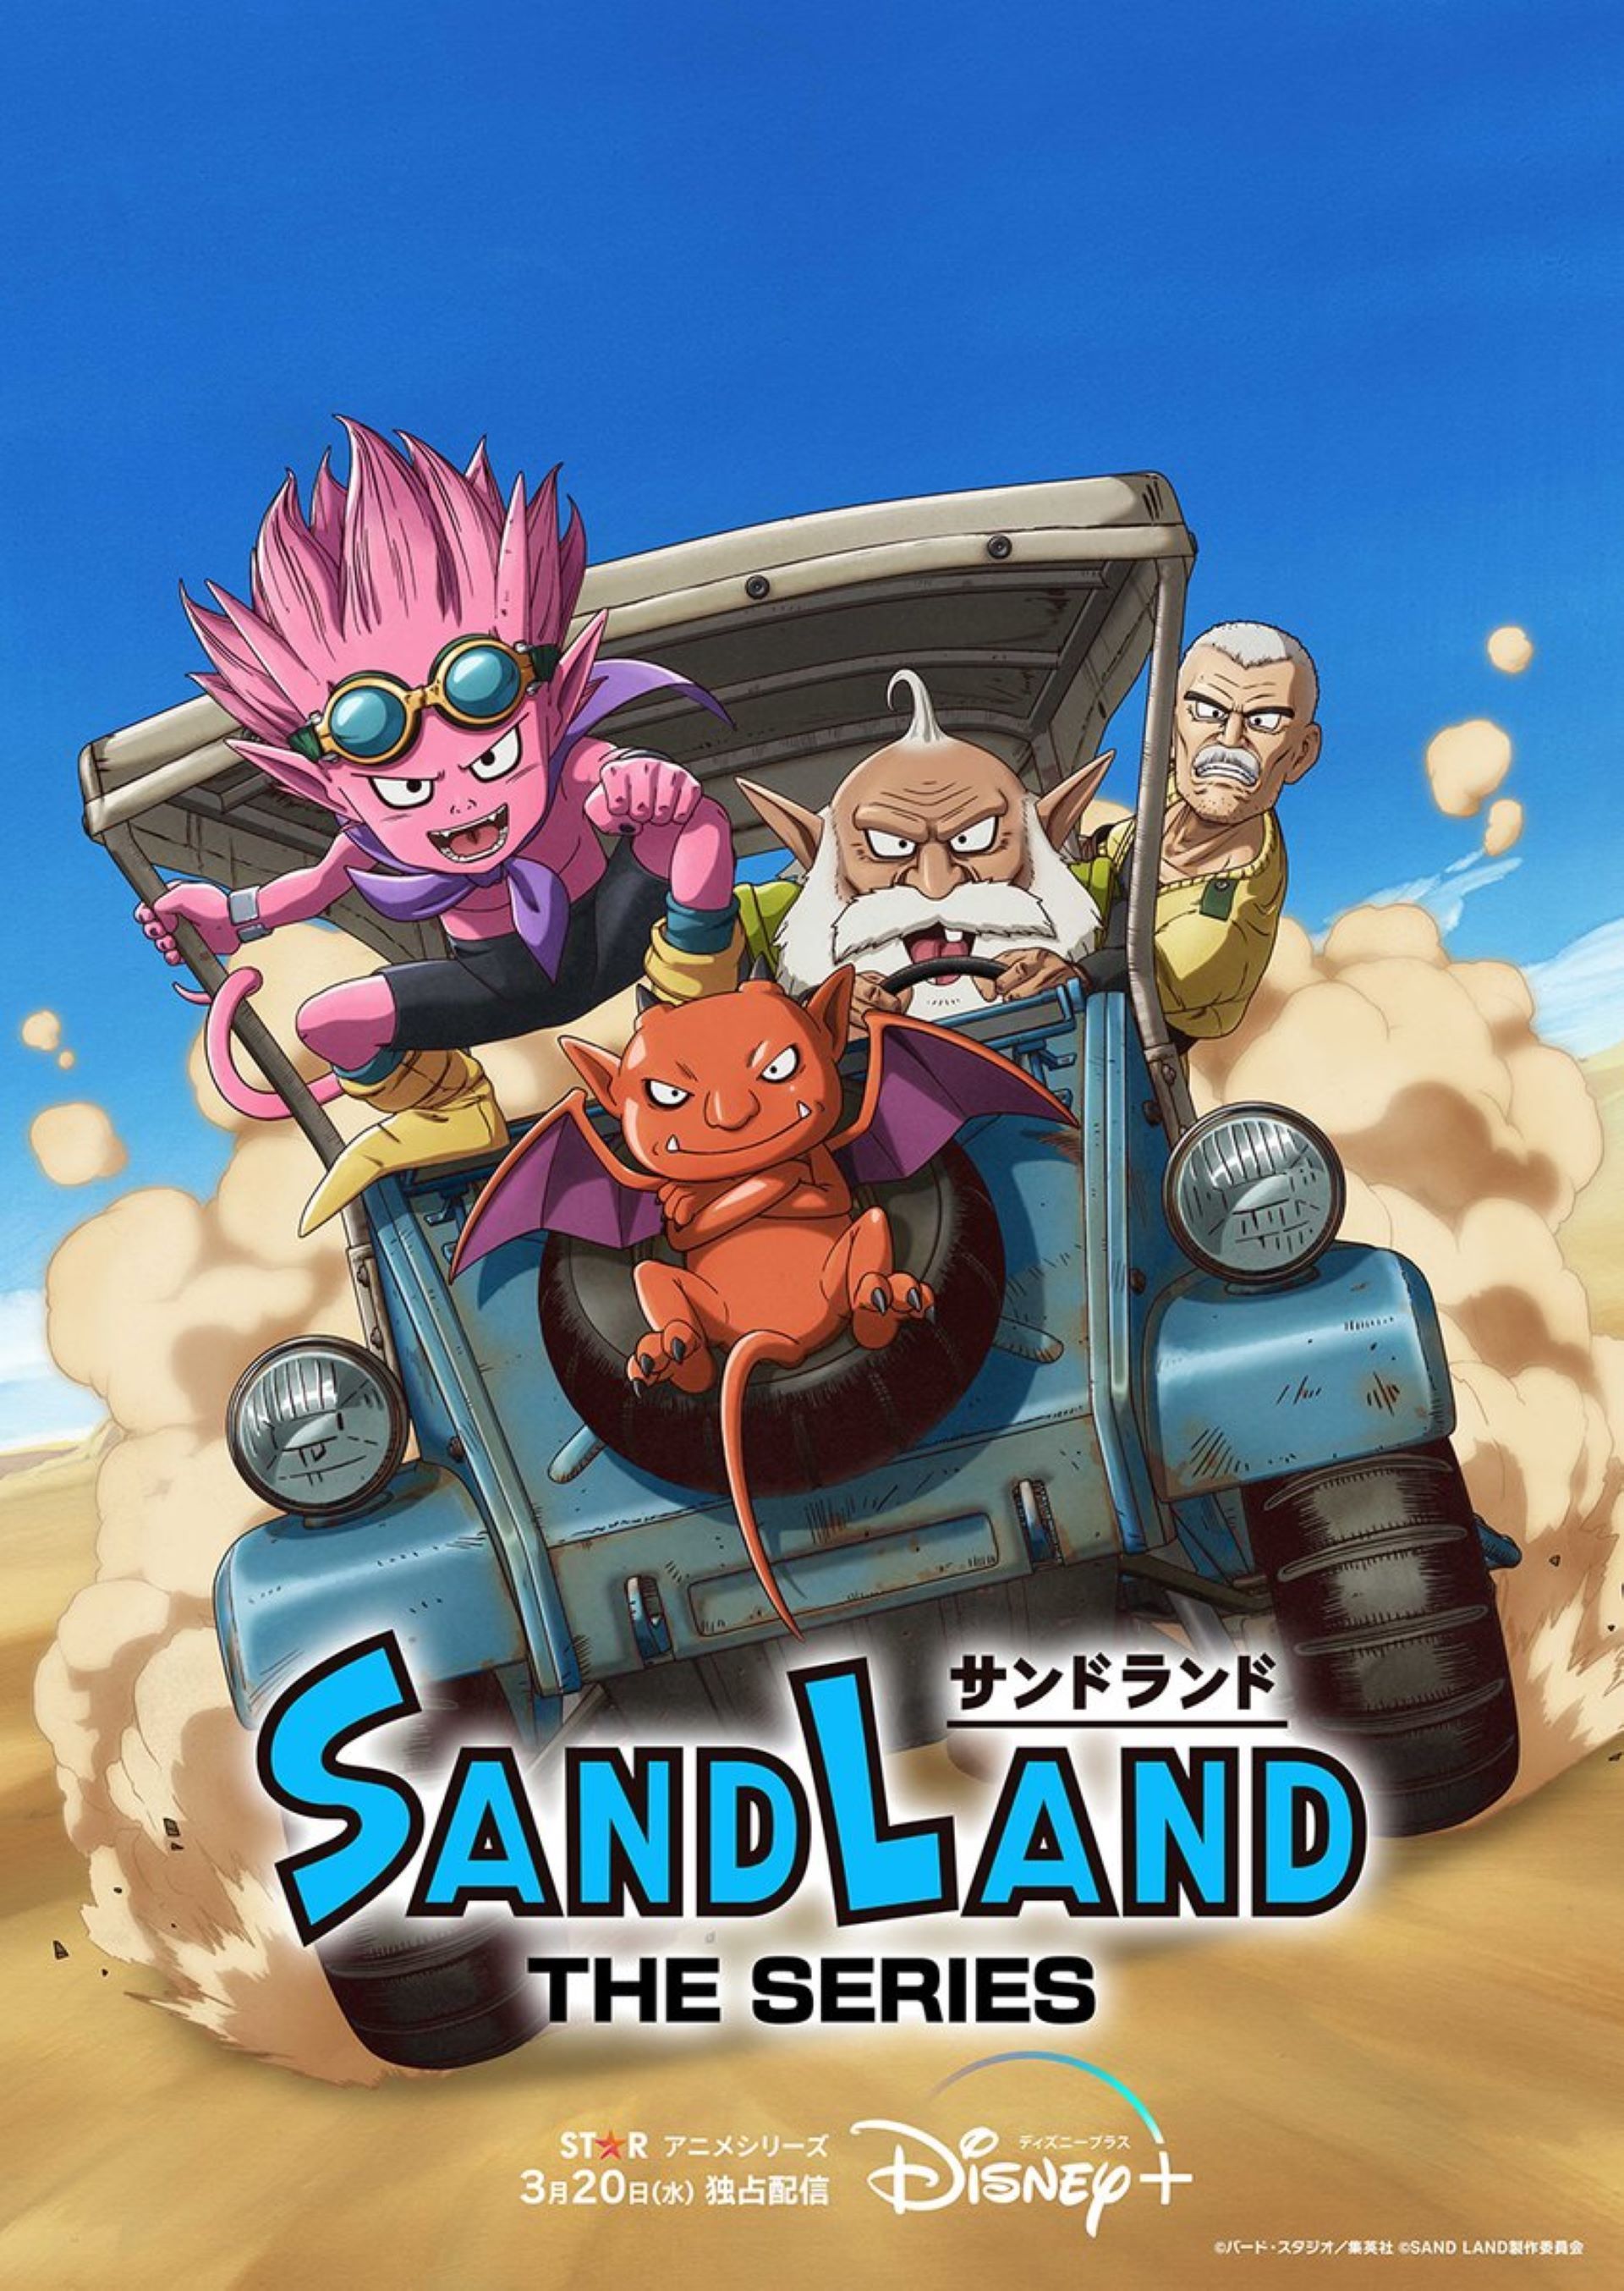 The main visual for Sand Land: The Series (Image via X/@Sandland_pj_jp)